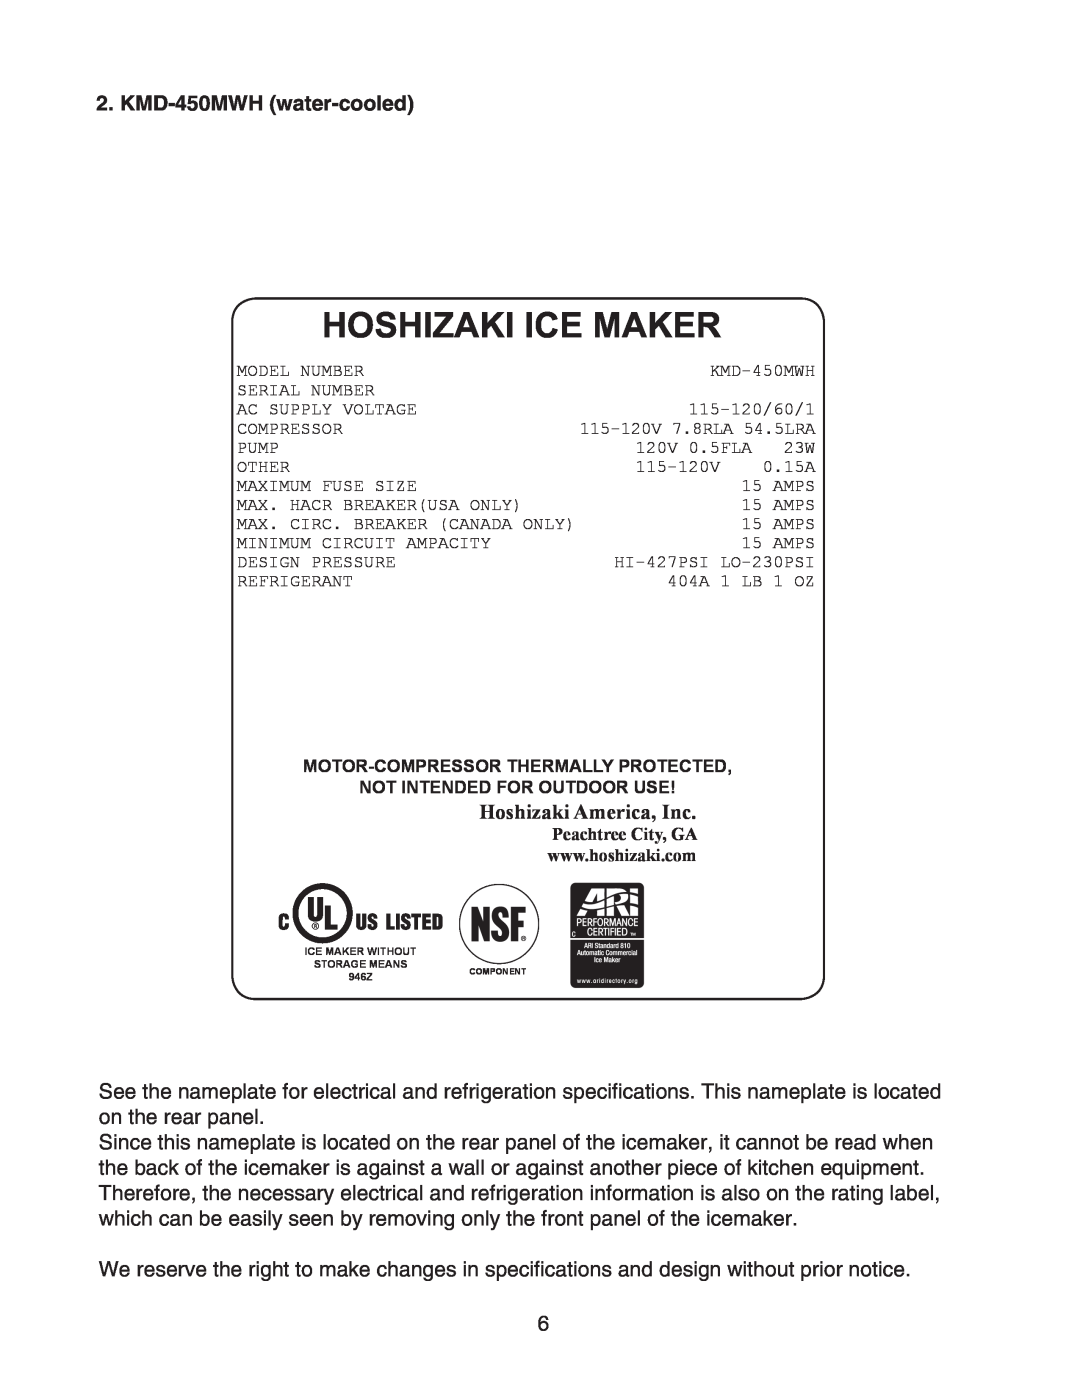 Hoshizaki KMD-450MAH KMD-450MWH water-cooled, Hoshizaki Ice Maker, Hoshizaki America, Inc, 115-120V 7.8RLA 54.5LRA 